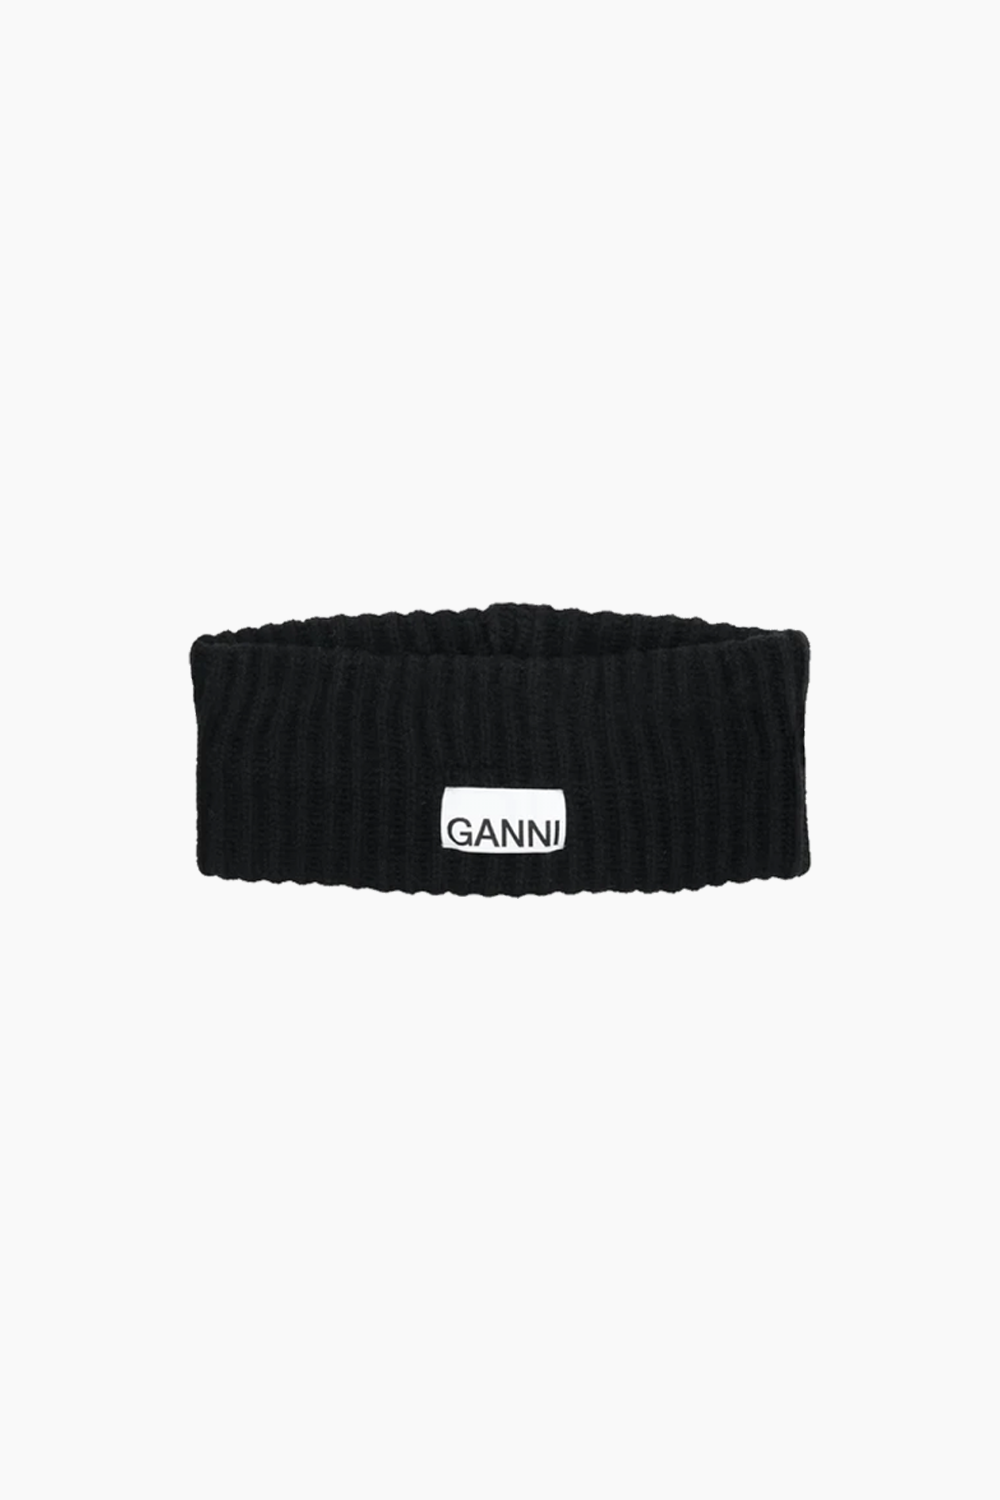 Structured Rib Headband A5117 - Black - GANNI